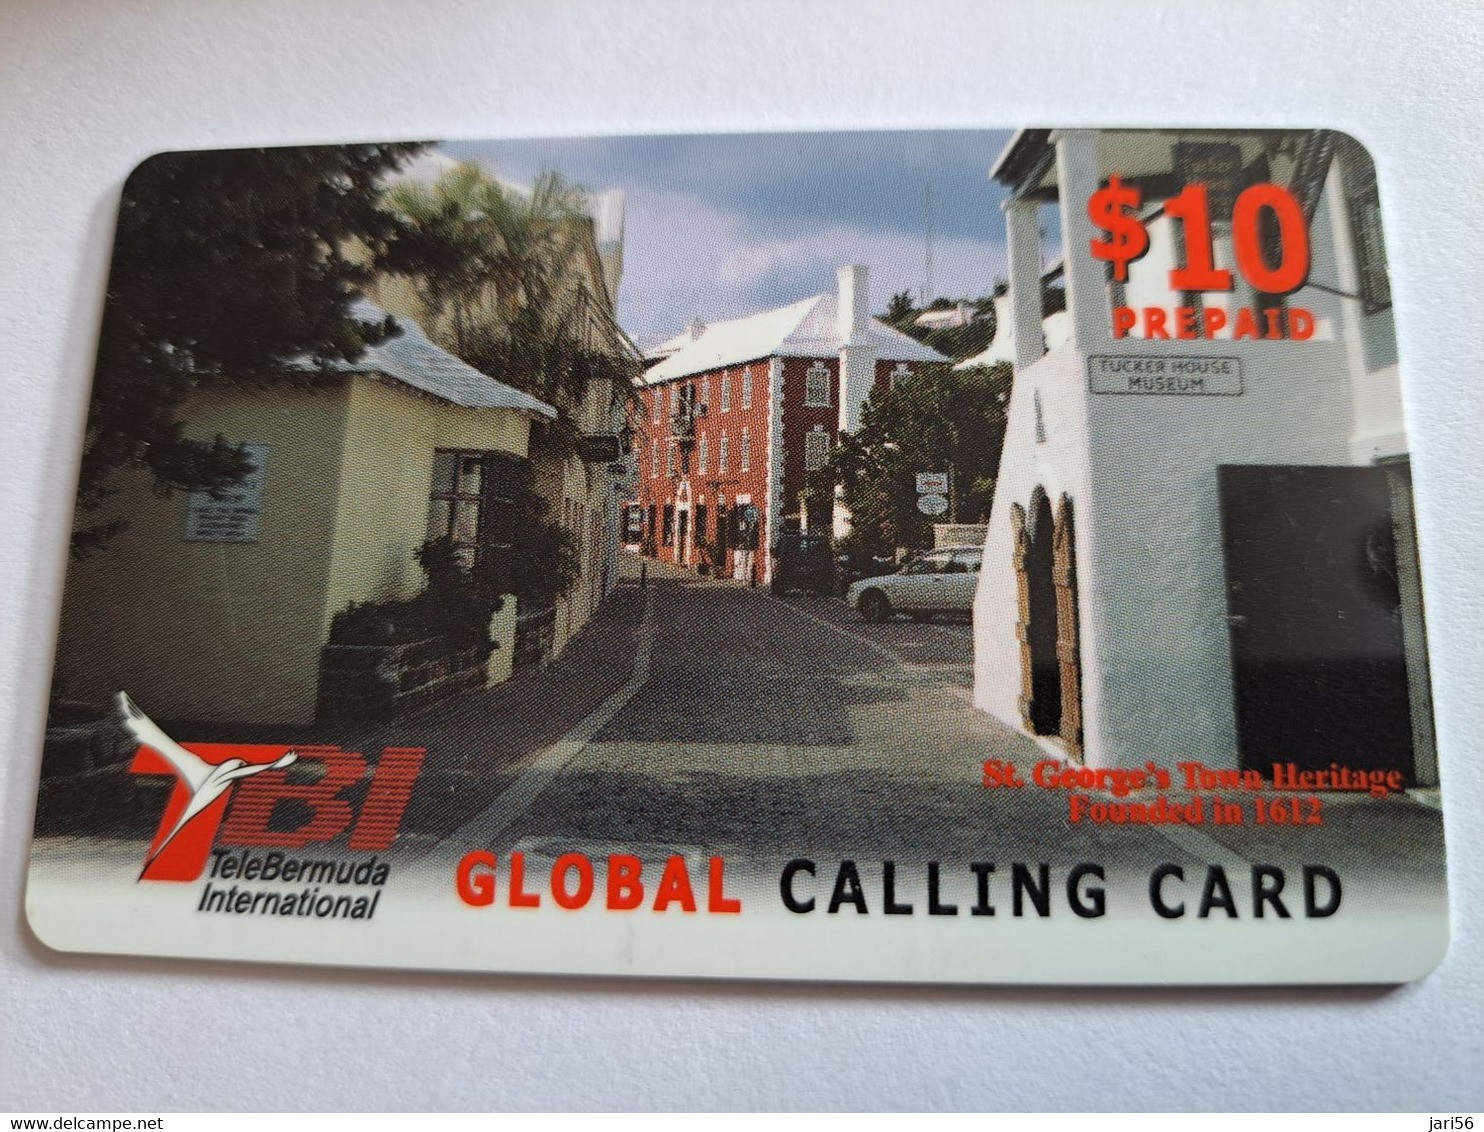 BERMUDA  $10 $ IN RED   -  BERMUDA  STREET SCENE       PREPAID CARD  Fine USED  TBI TELEBERMUDA INTERNATIONAL **10274** - Bermuda